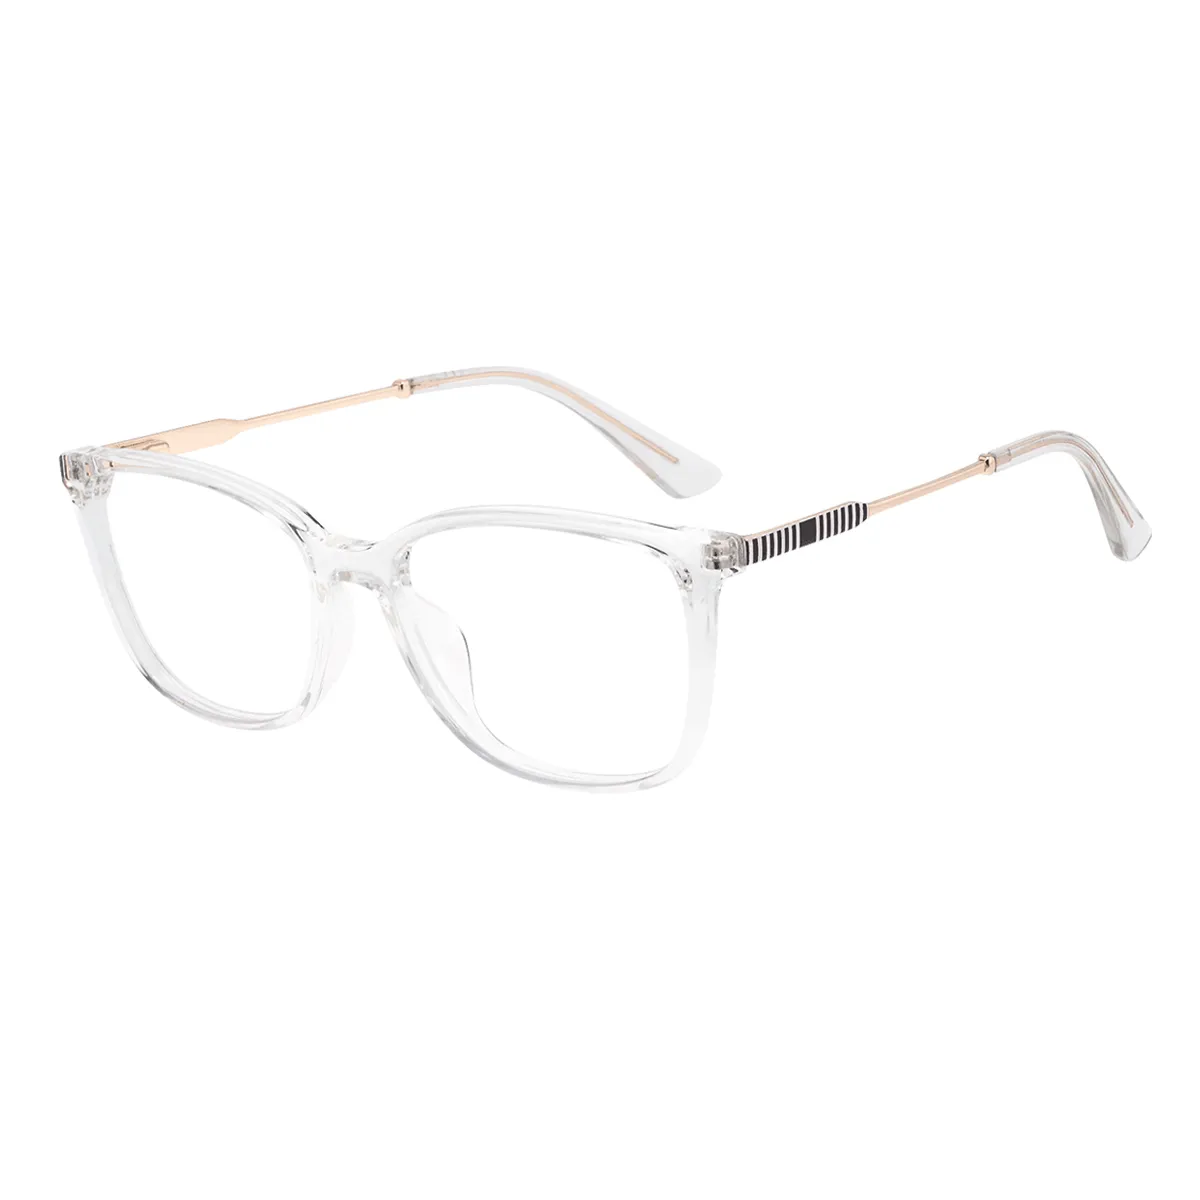 Huber - Square Translucent Glasses for Men & Women - EFE